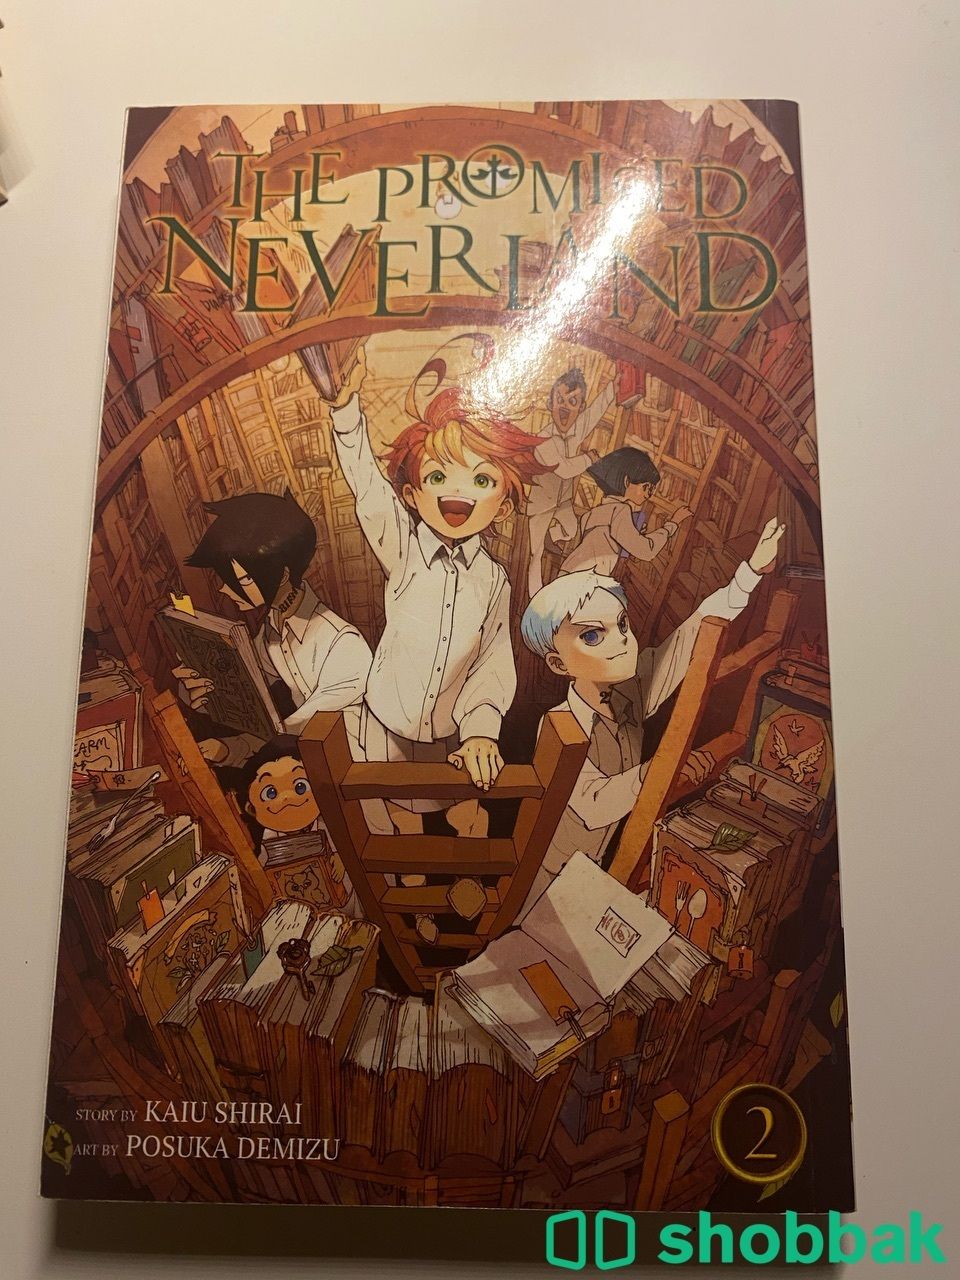 Manga The Promised Neverland  Shobbak Saudi Arabia